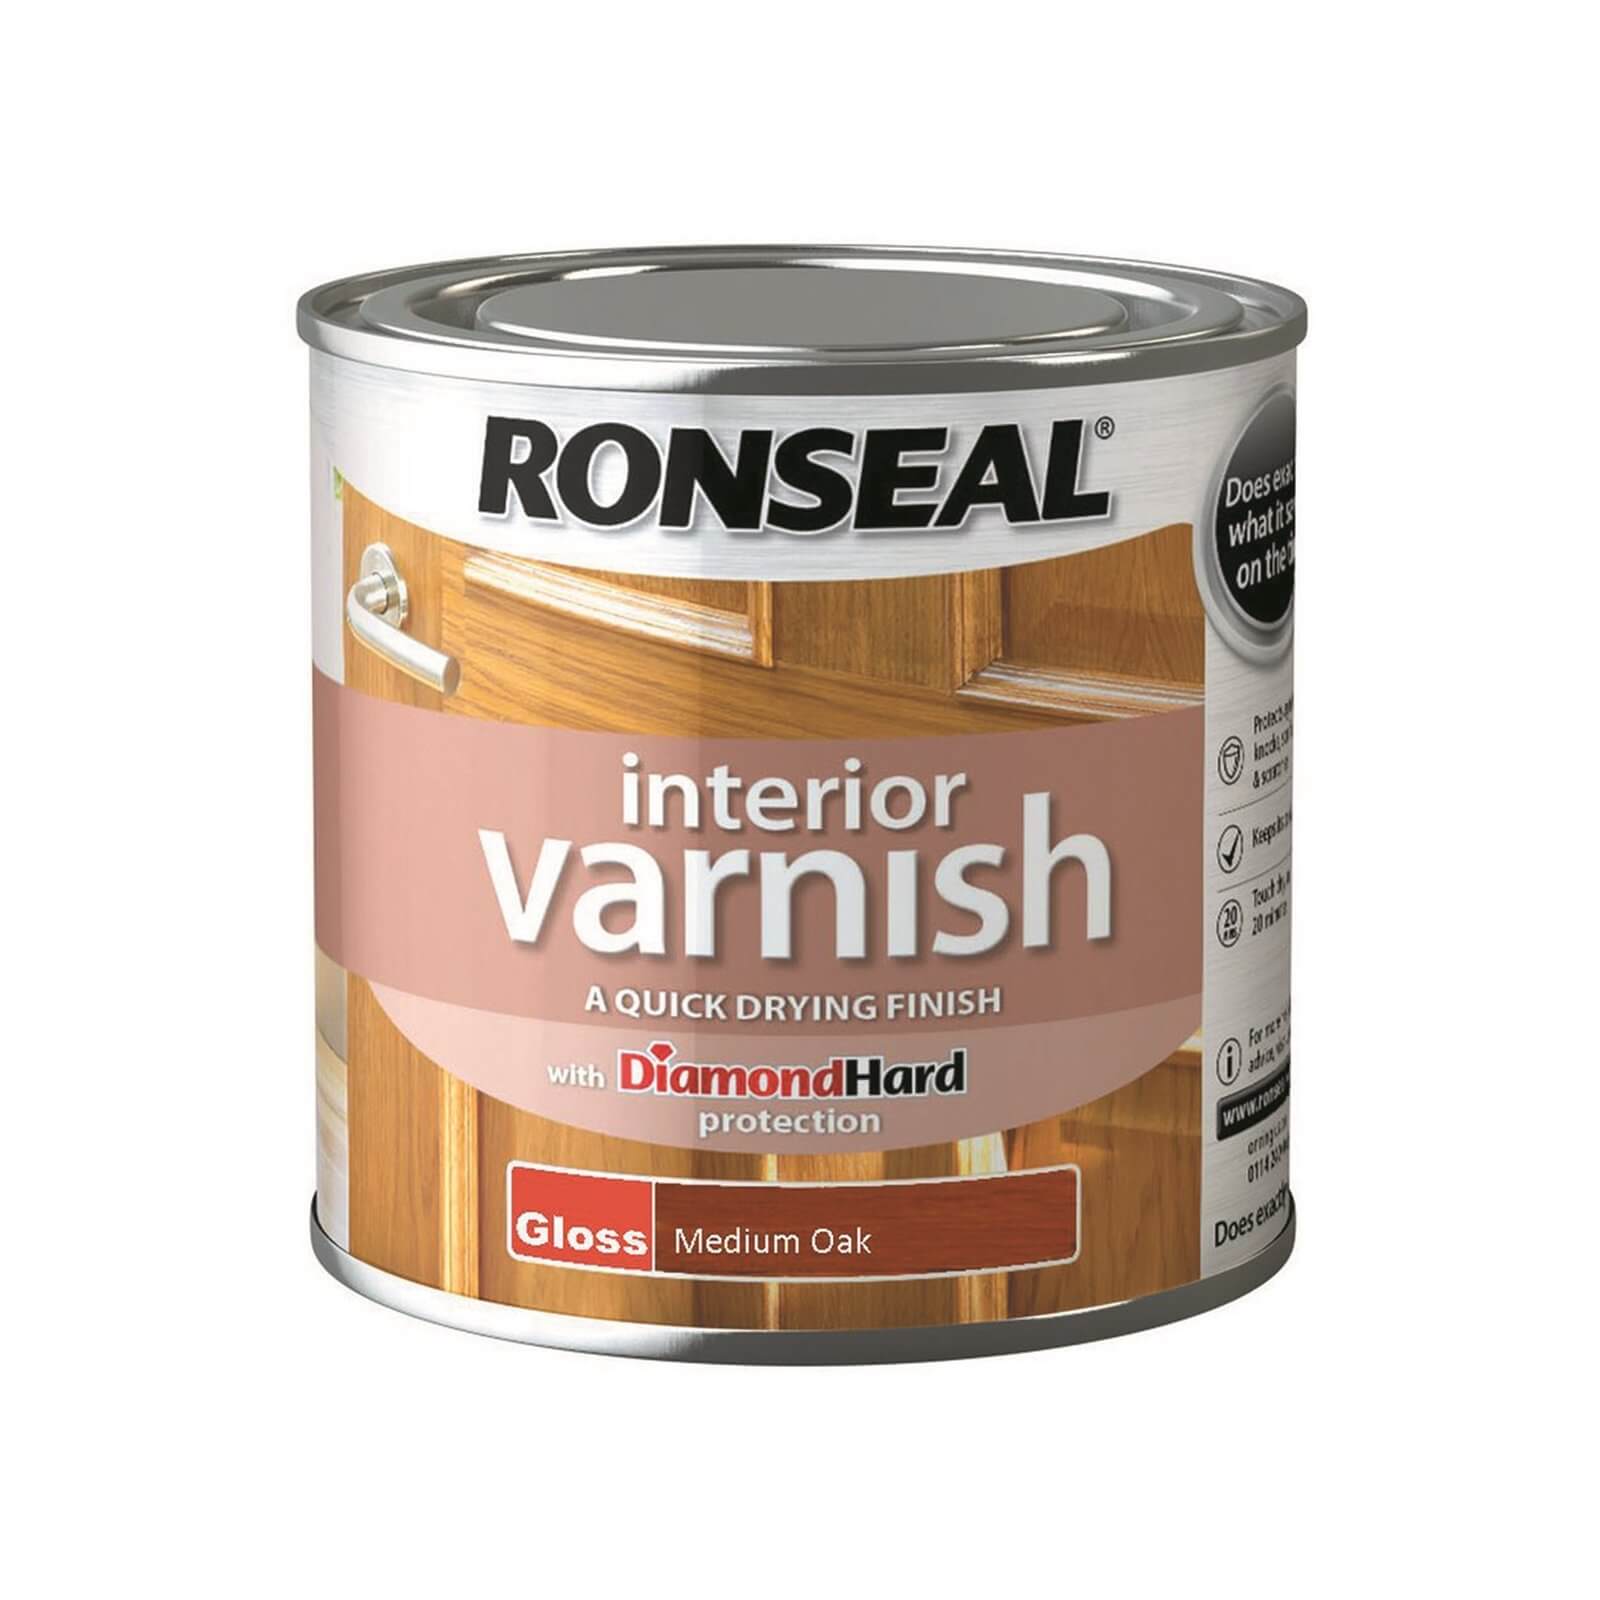 Photo of Ronseal Interior Varnish Gloss Medium Oak - 250ml